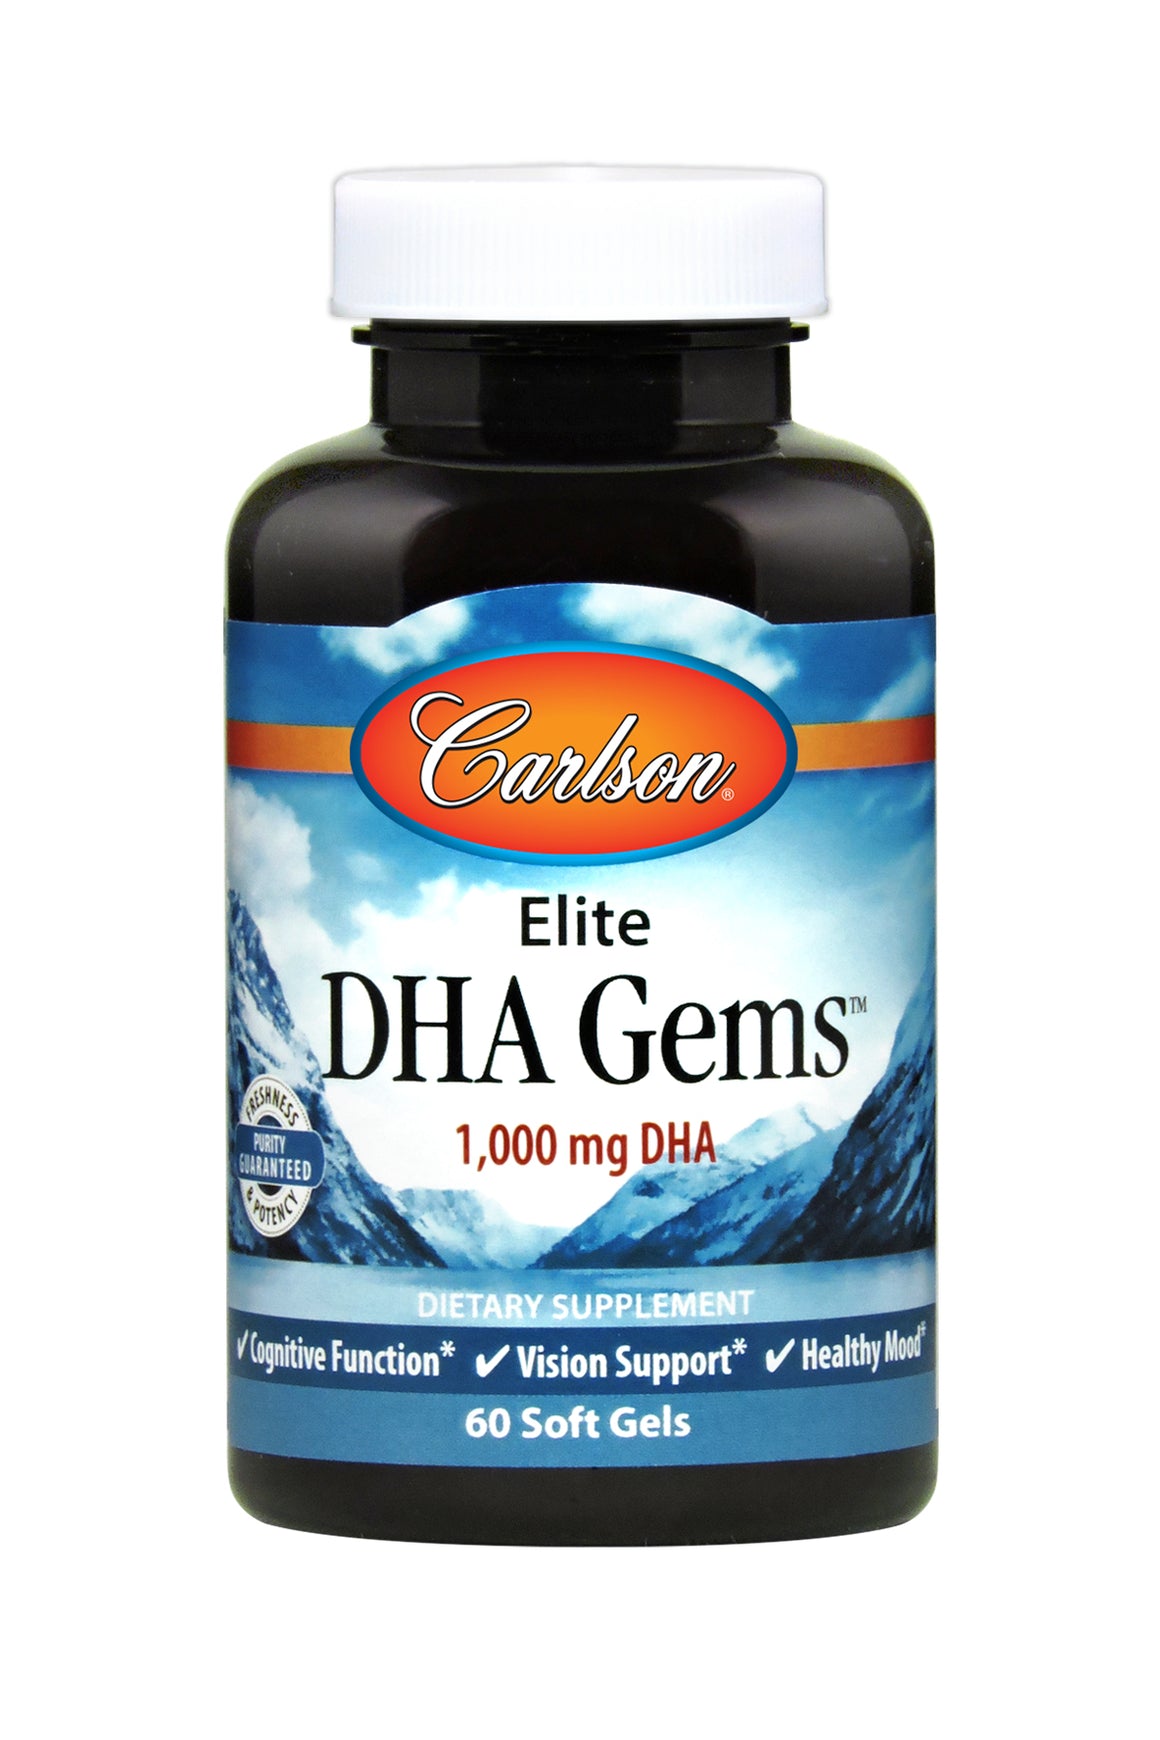 A bottle of Carlson Elite DHA Gems